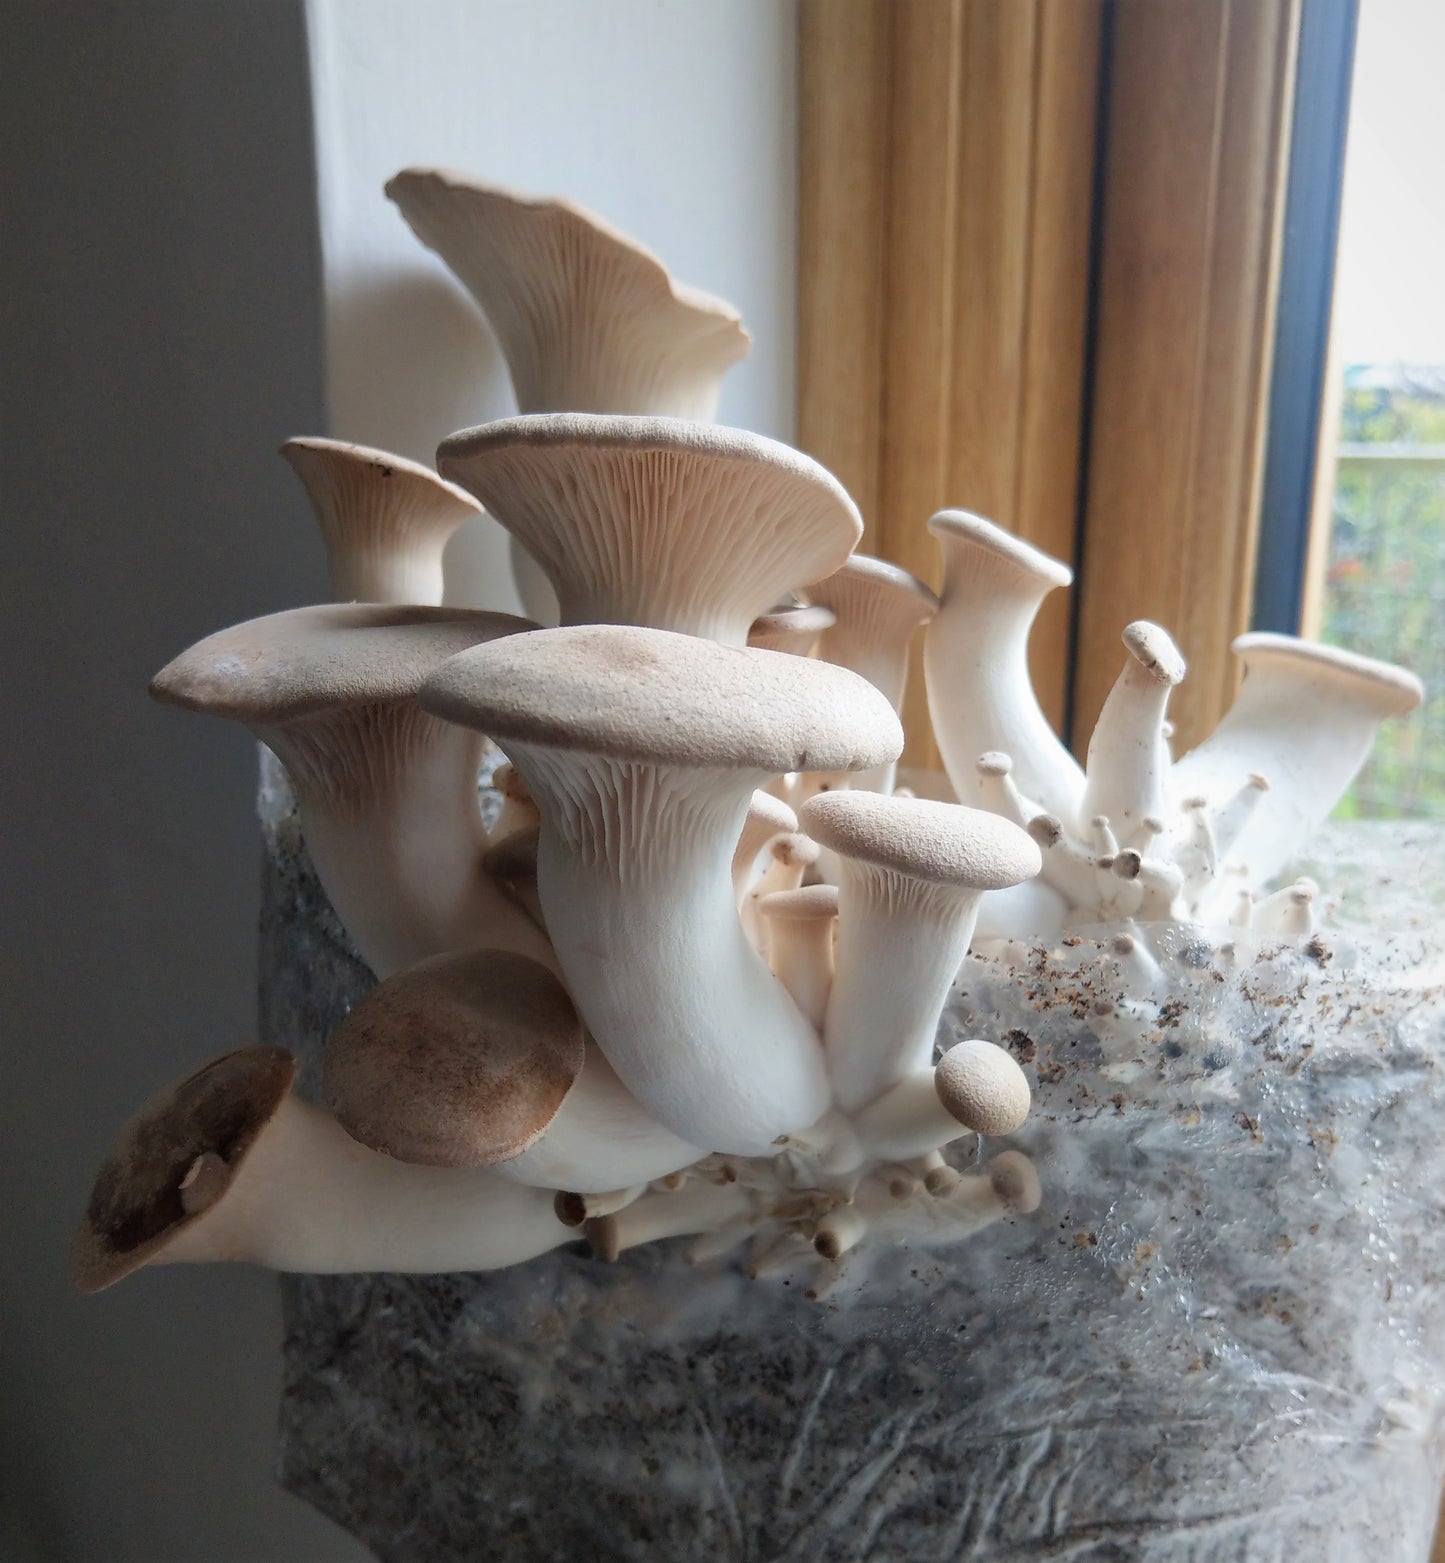 king oyster mushroom grow kit